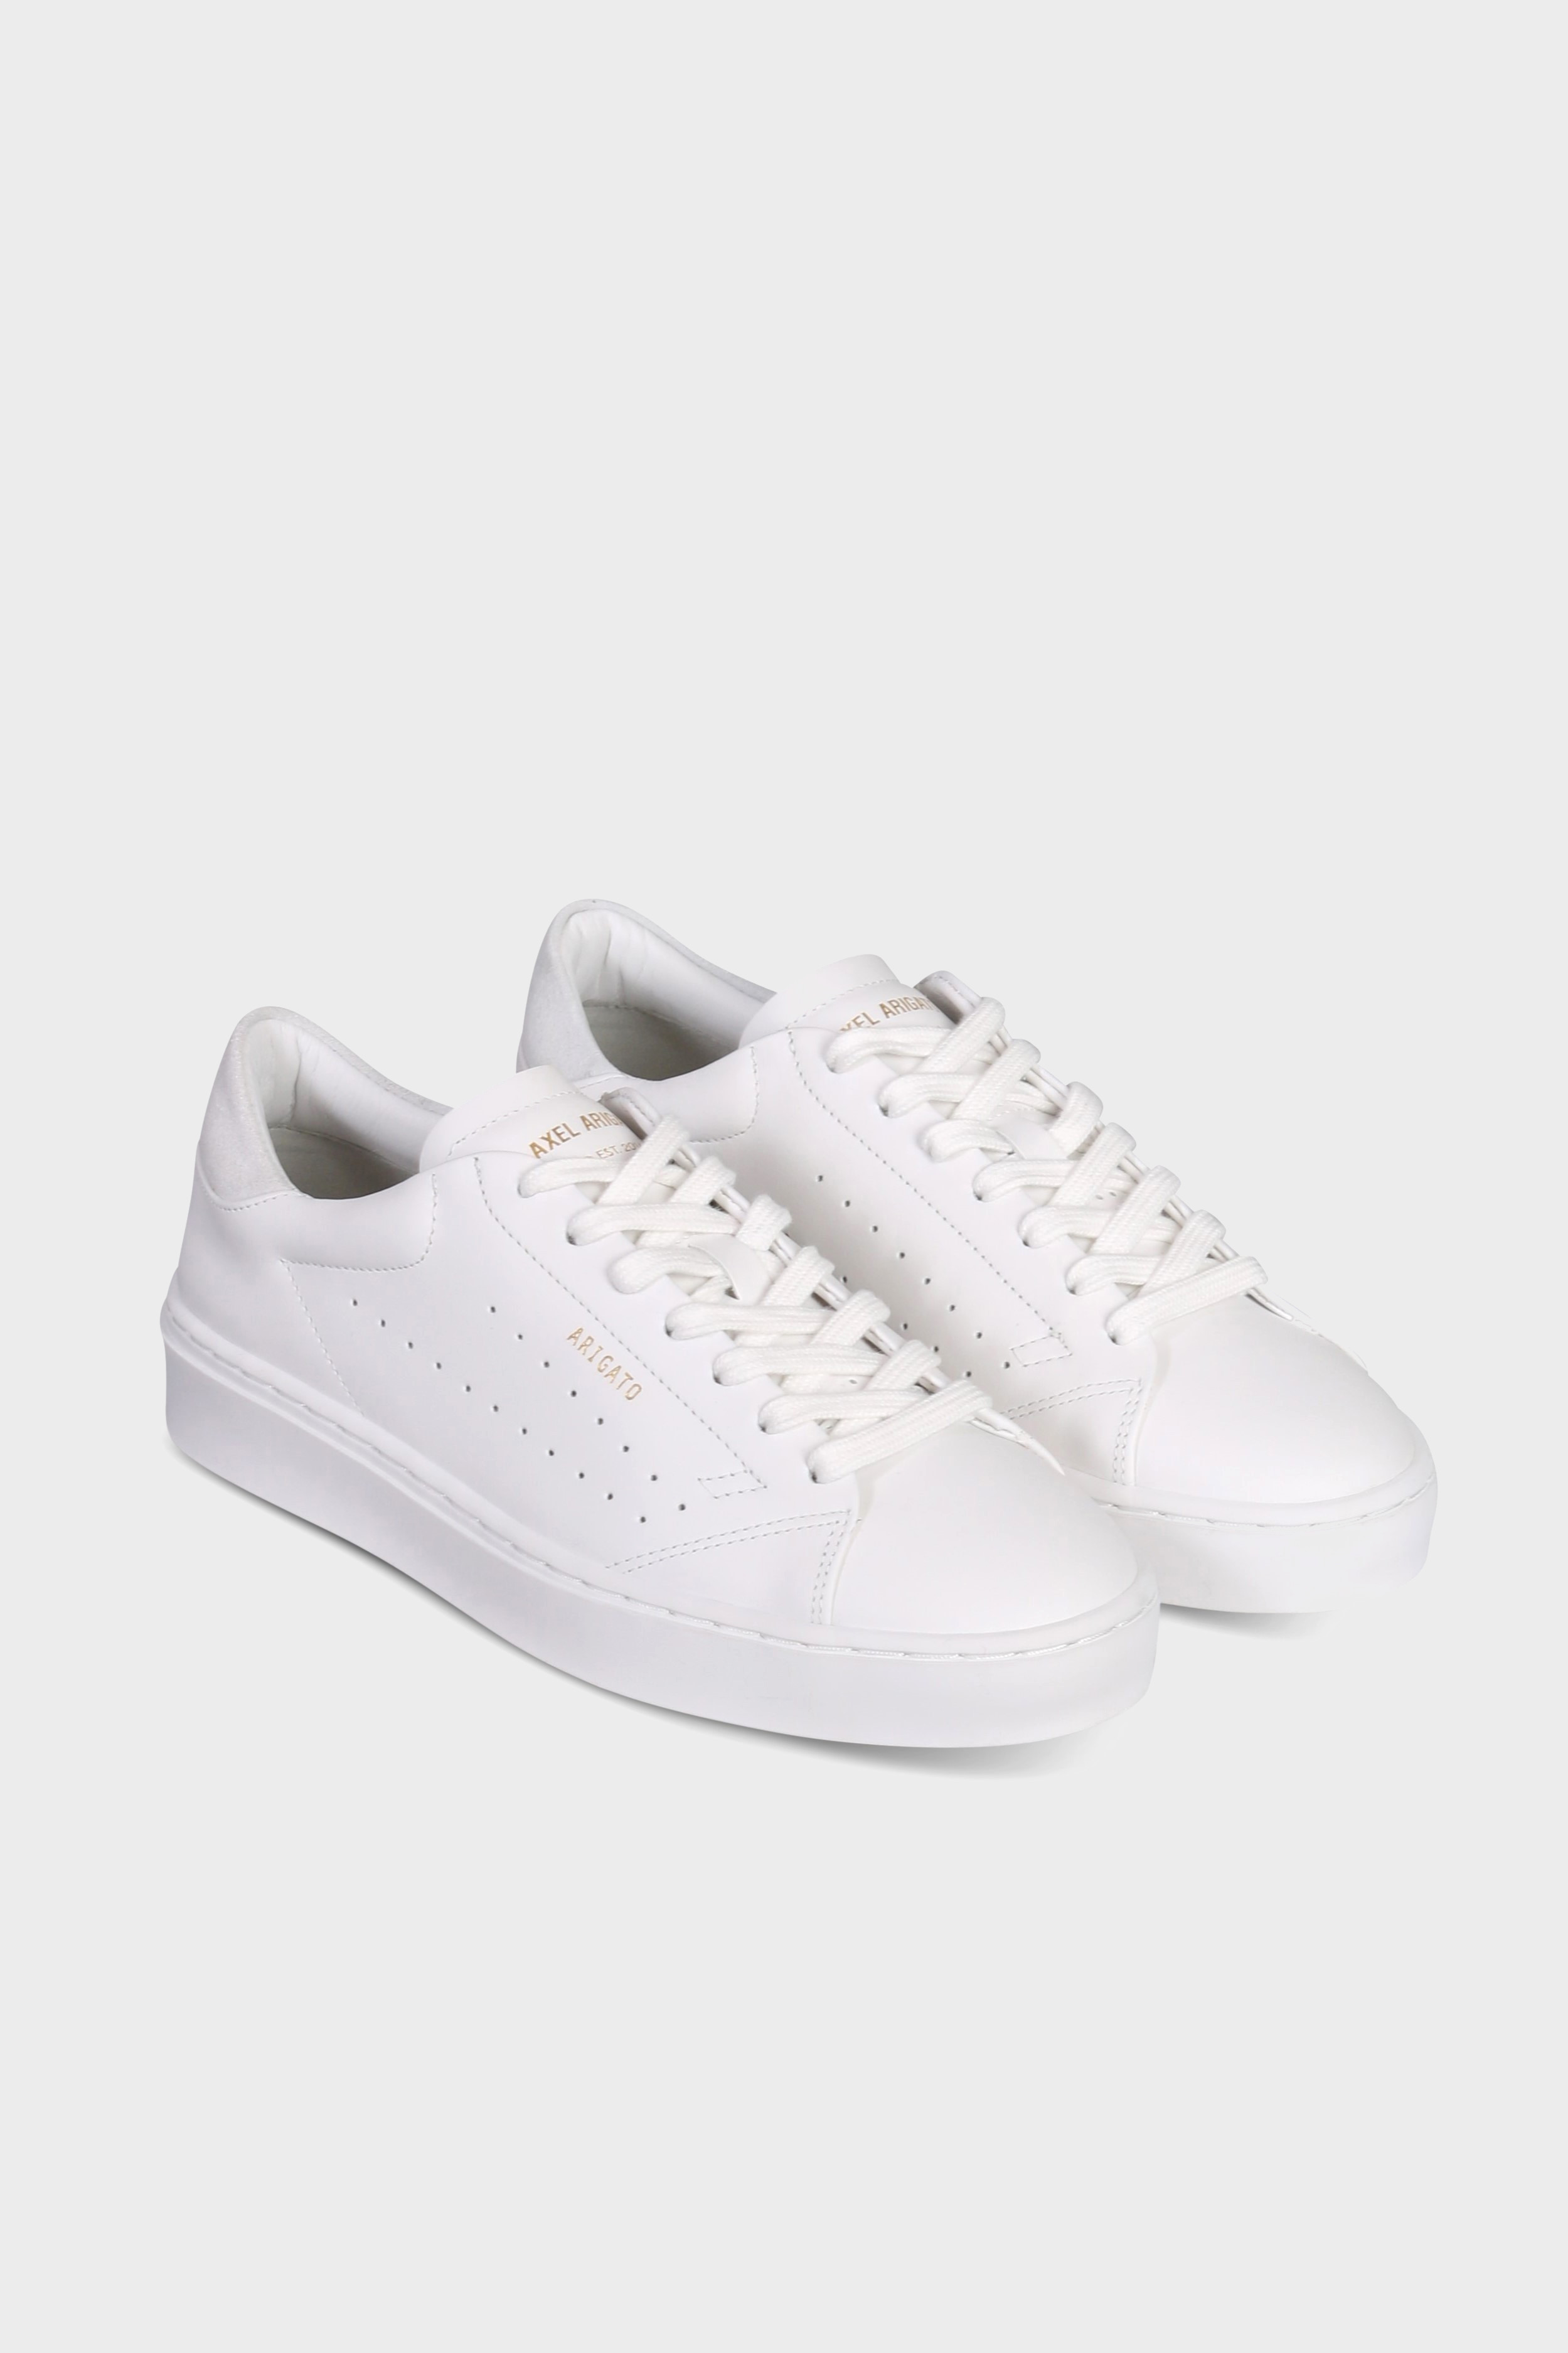 AXEL ARIGATO Court Sneaker in White/Light Grey 47